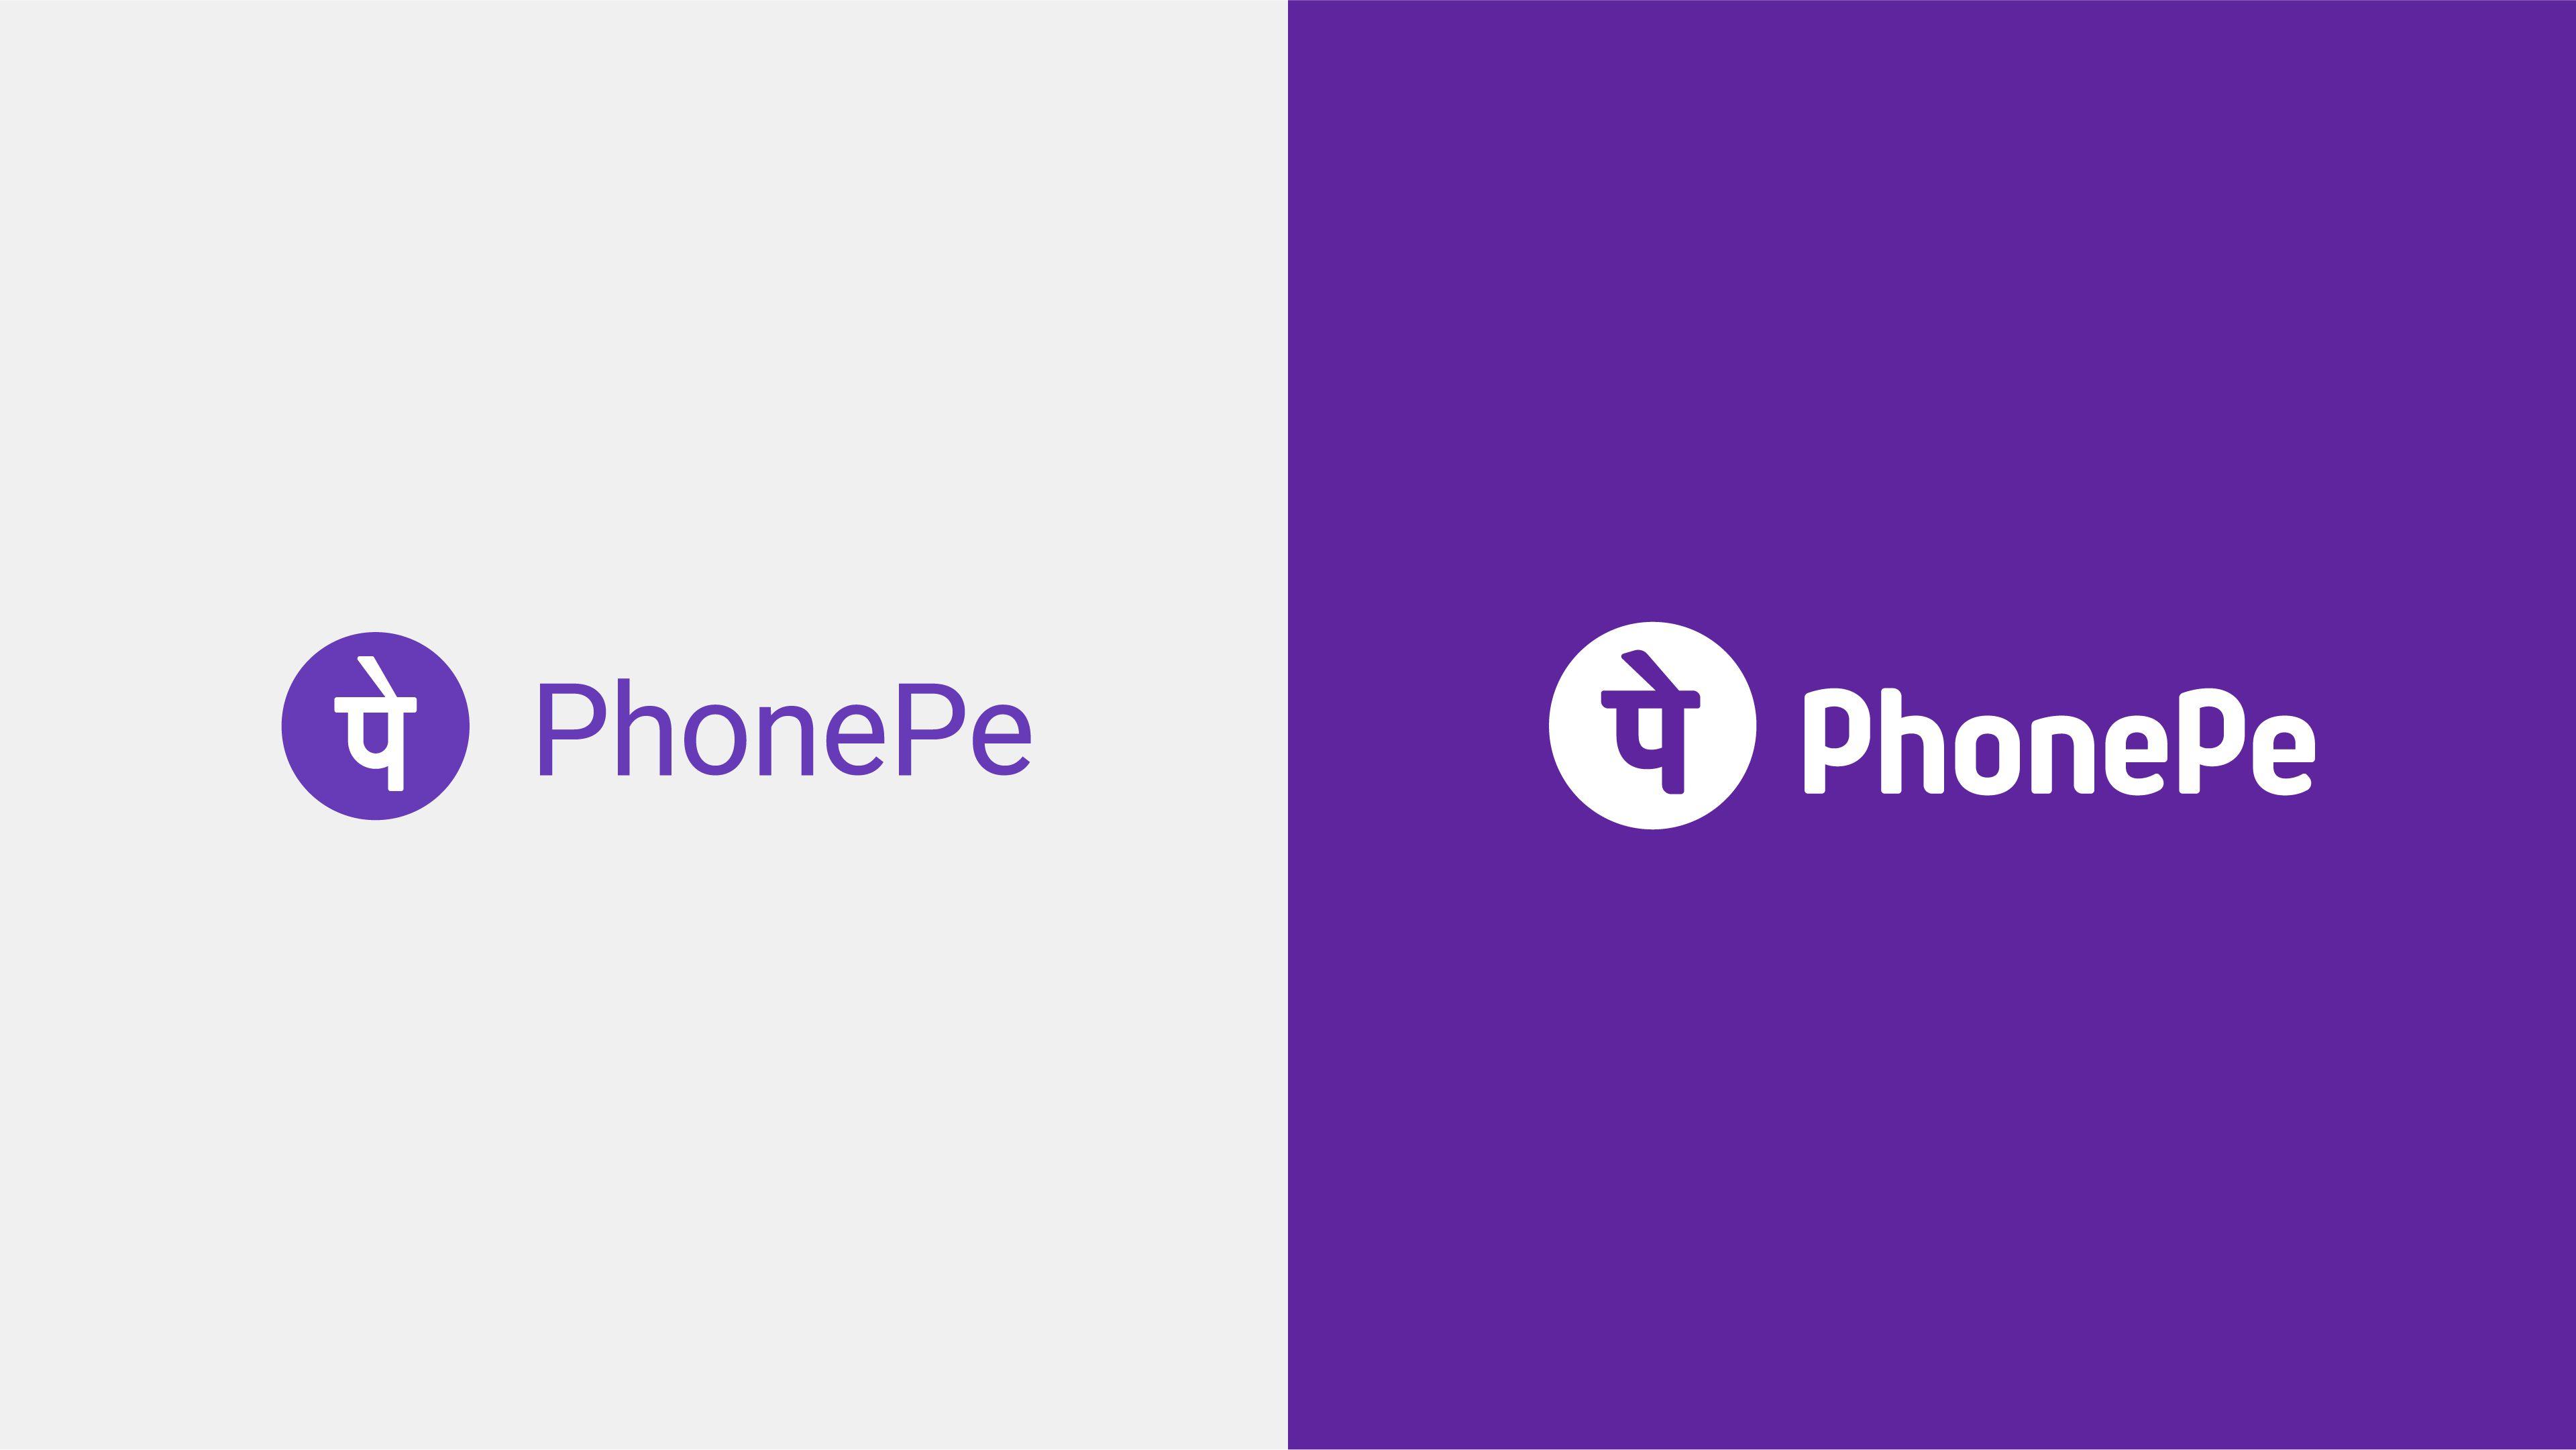 PhonePe Logo - Codesign - Onwards, Together